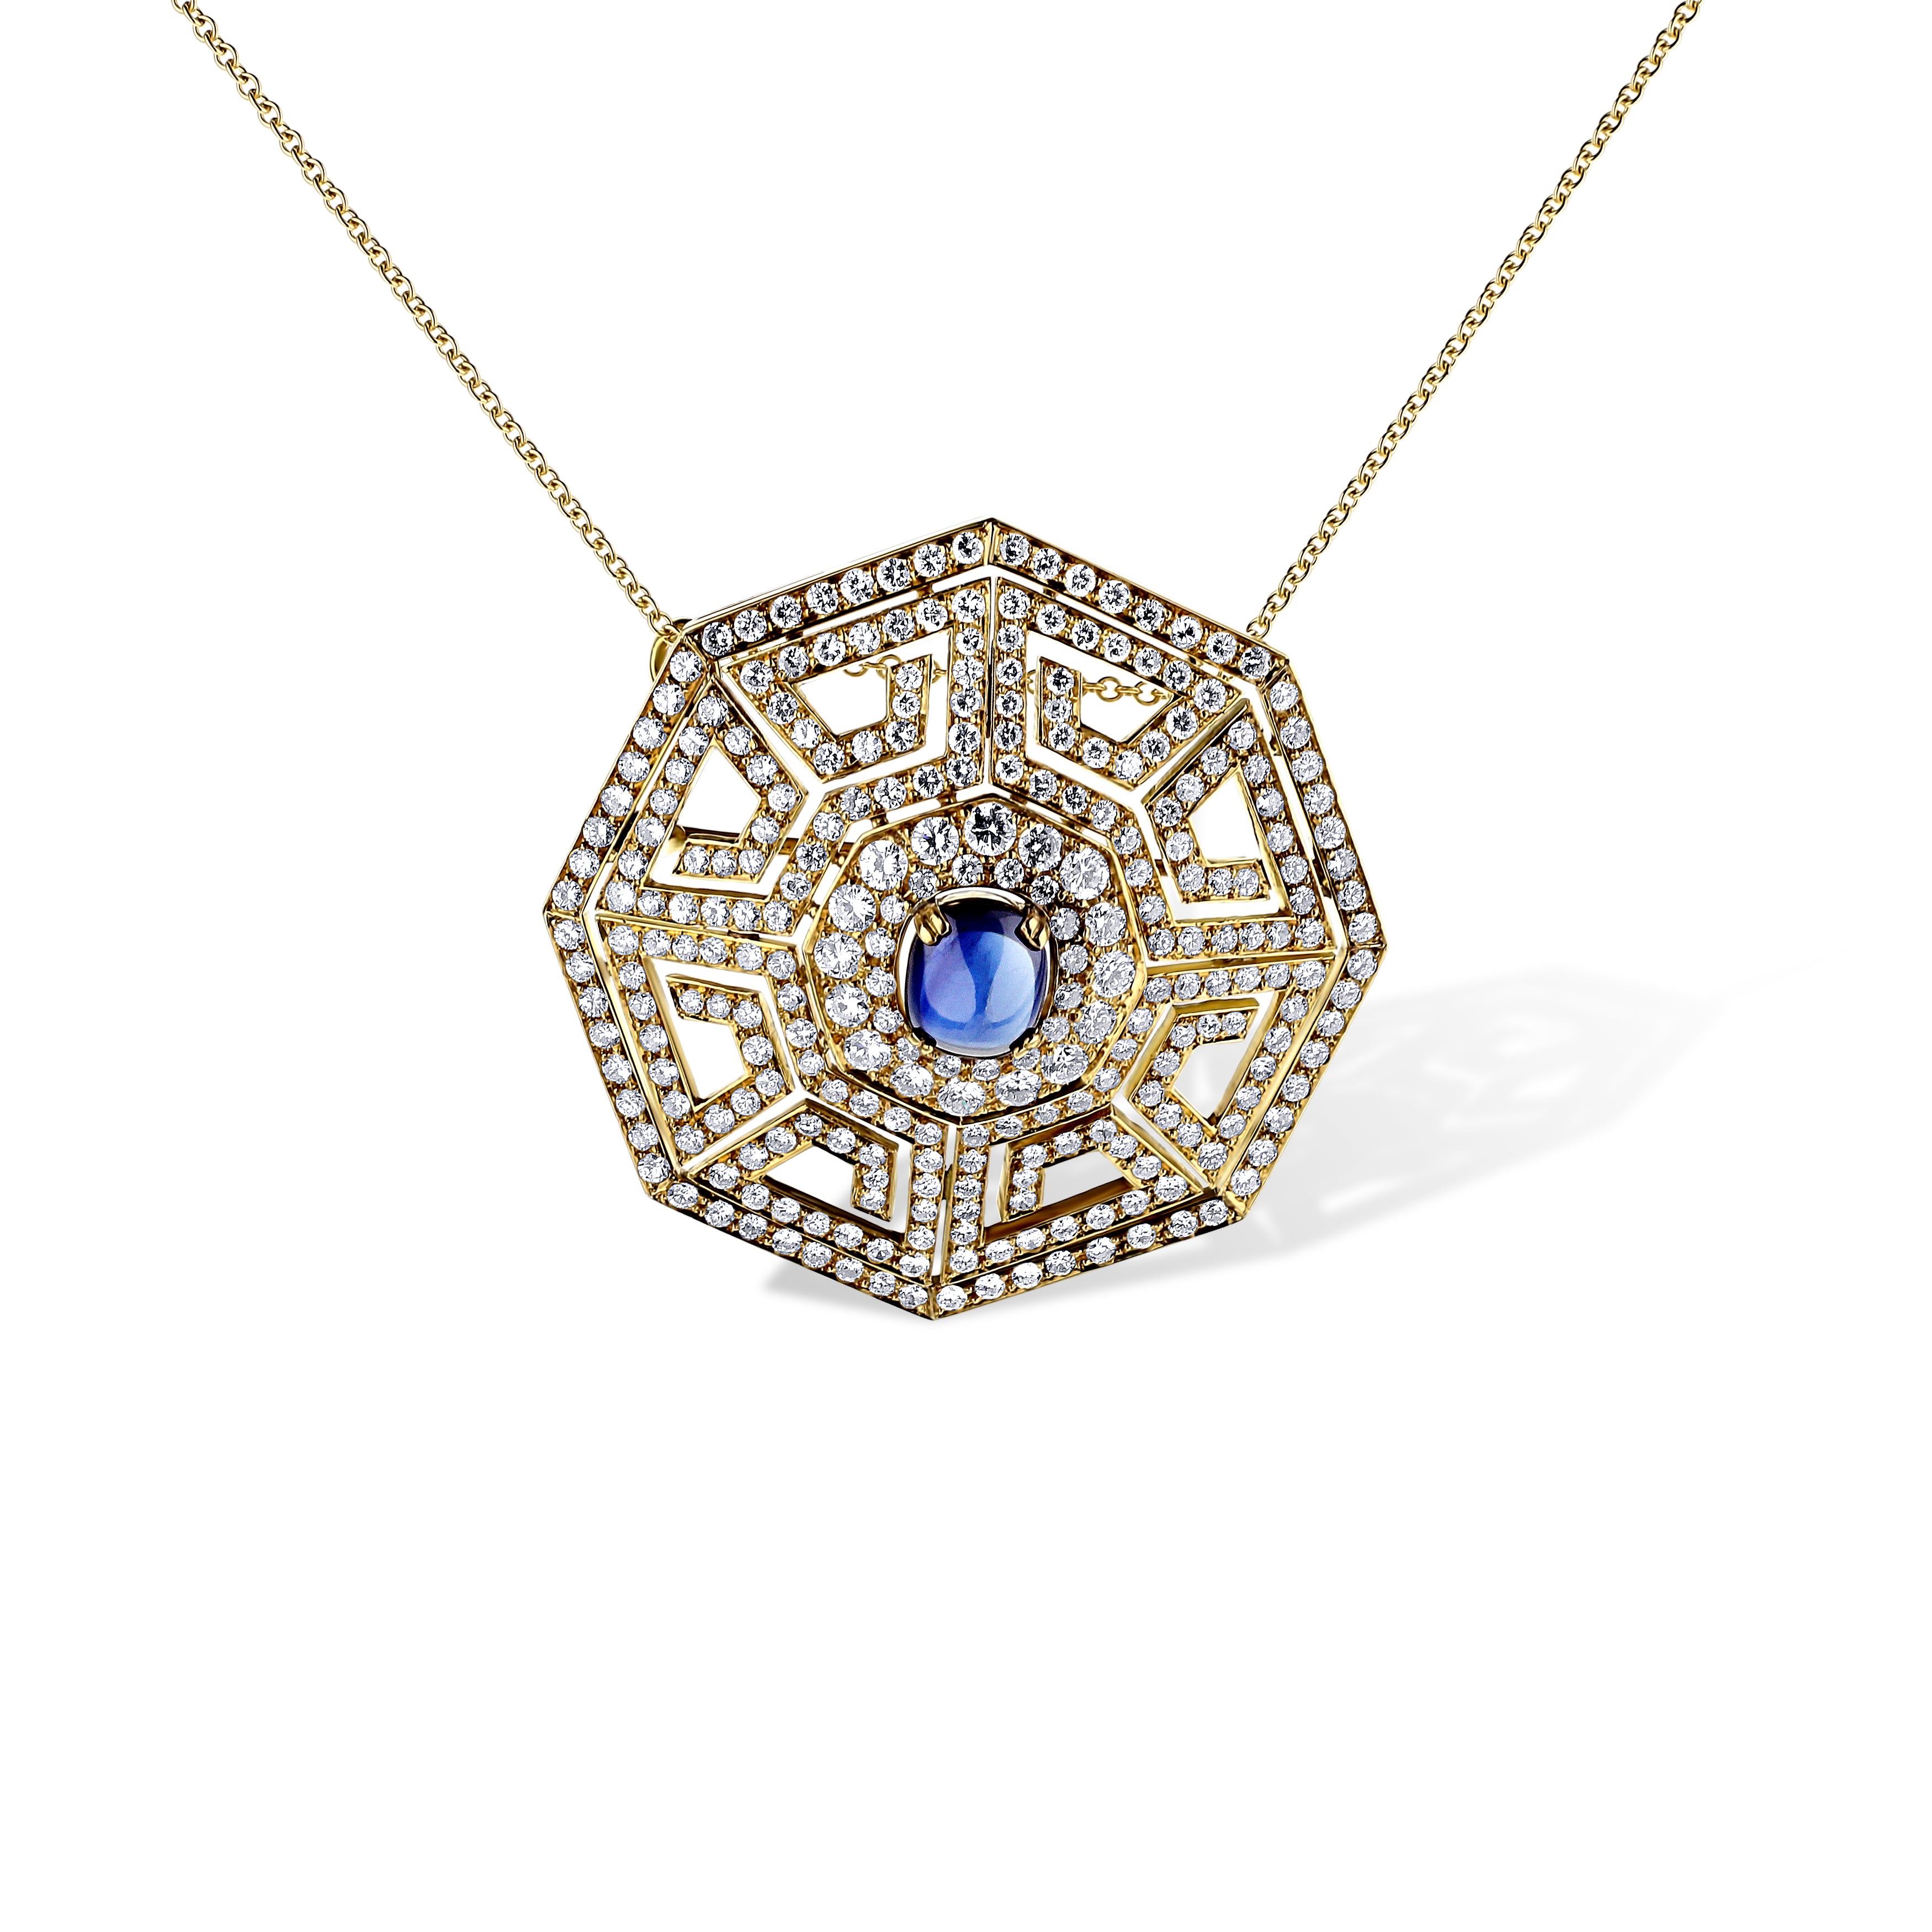 18K Yellow Gold Art Deco Design Diamond Pendant Necklace With A Blue Sapphire Cabochon